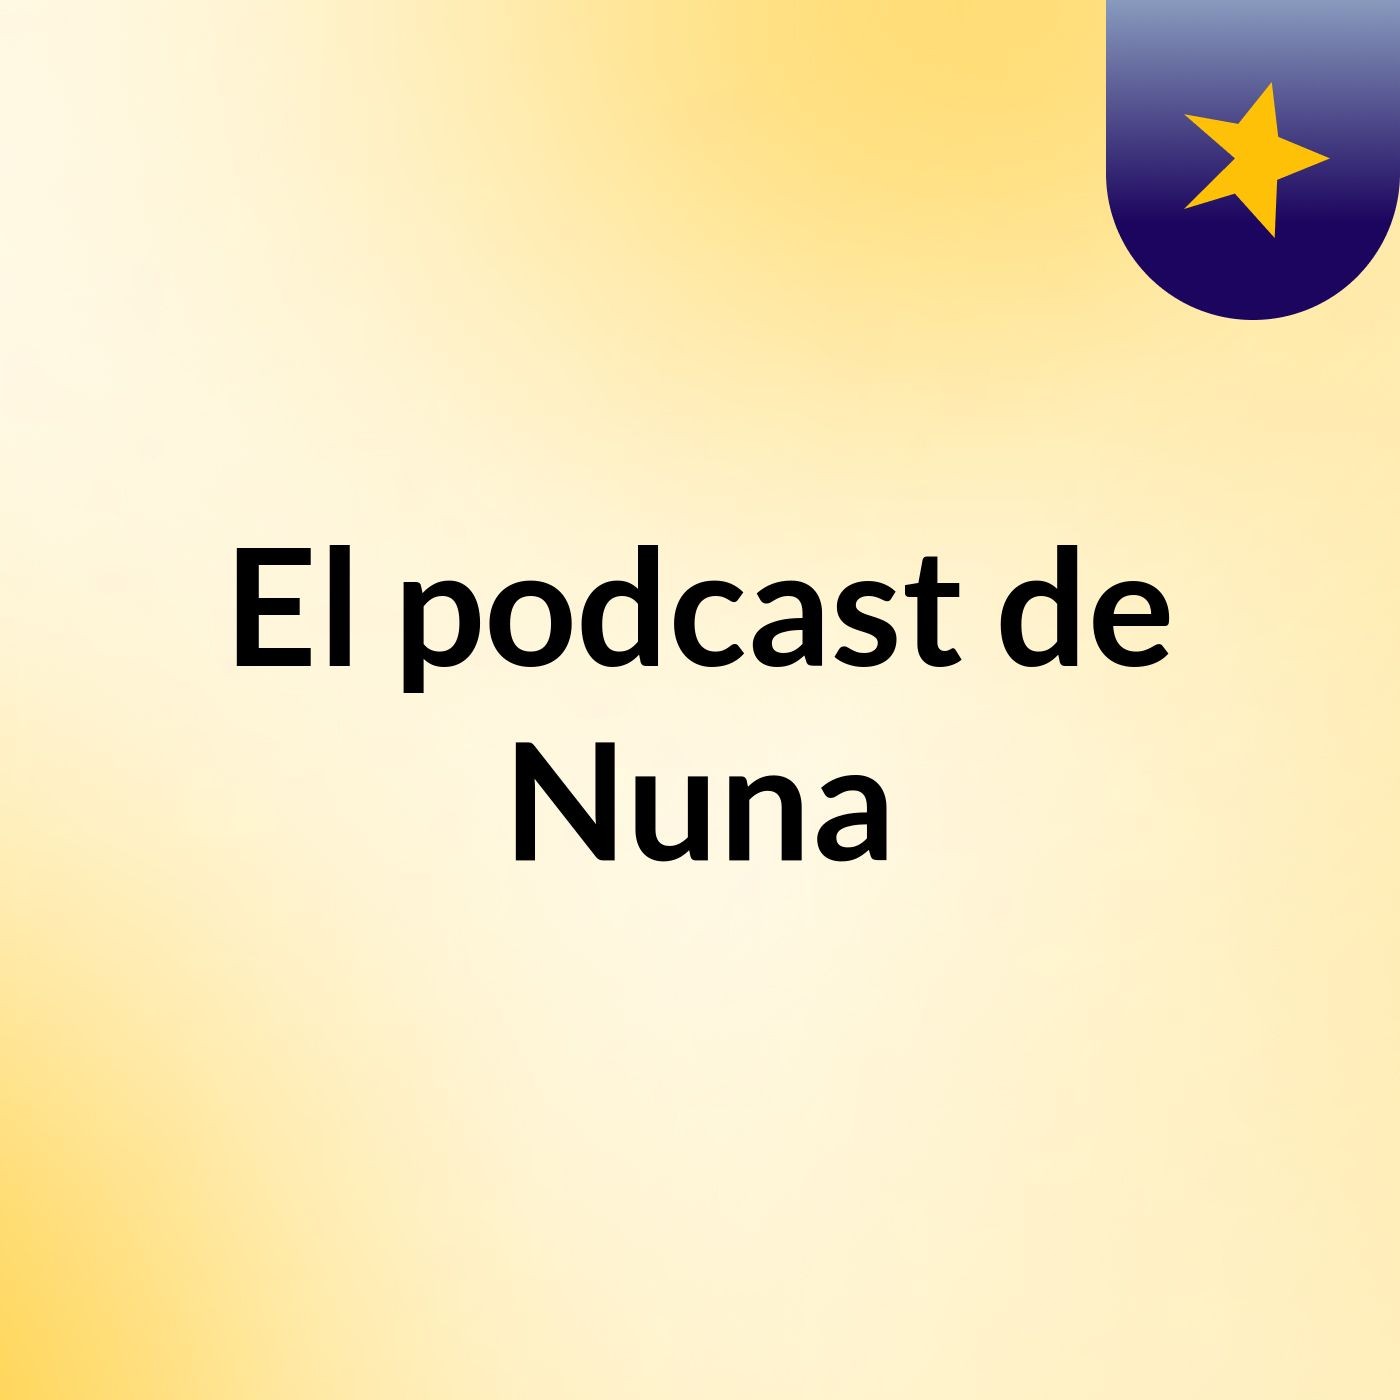 El podcast de Nuna